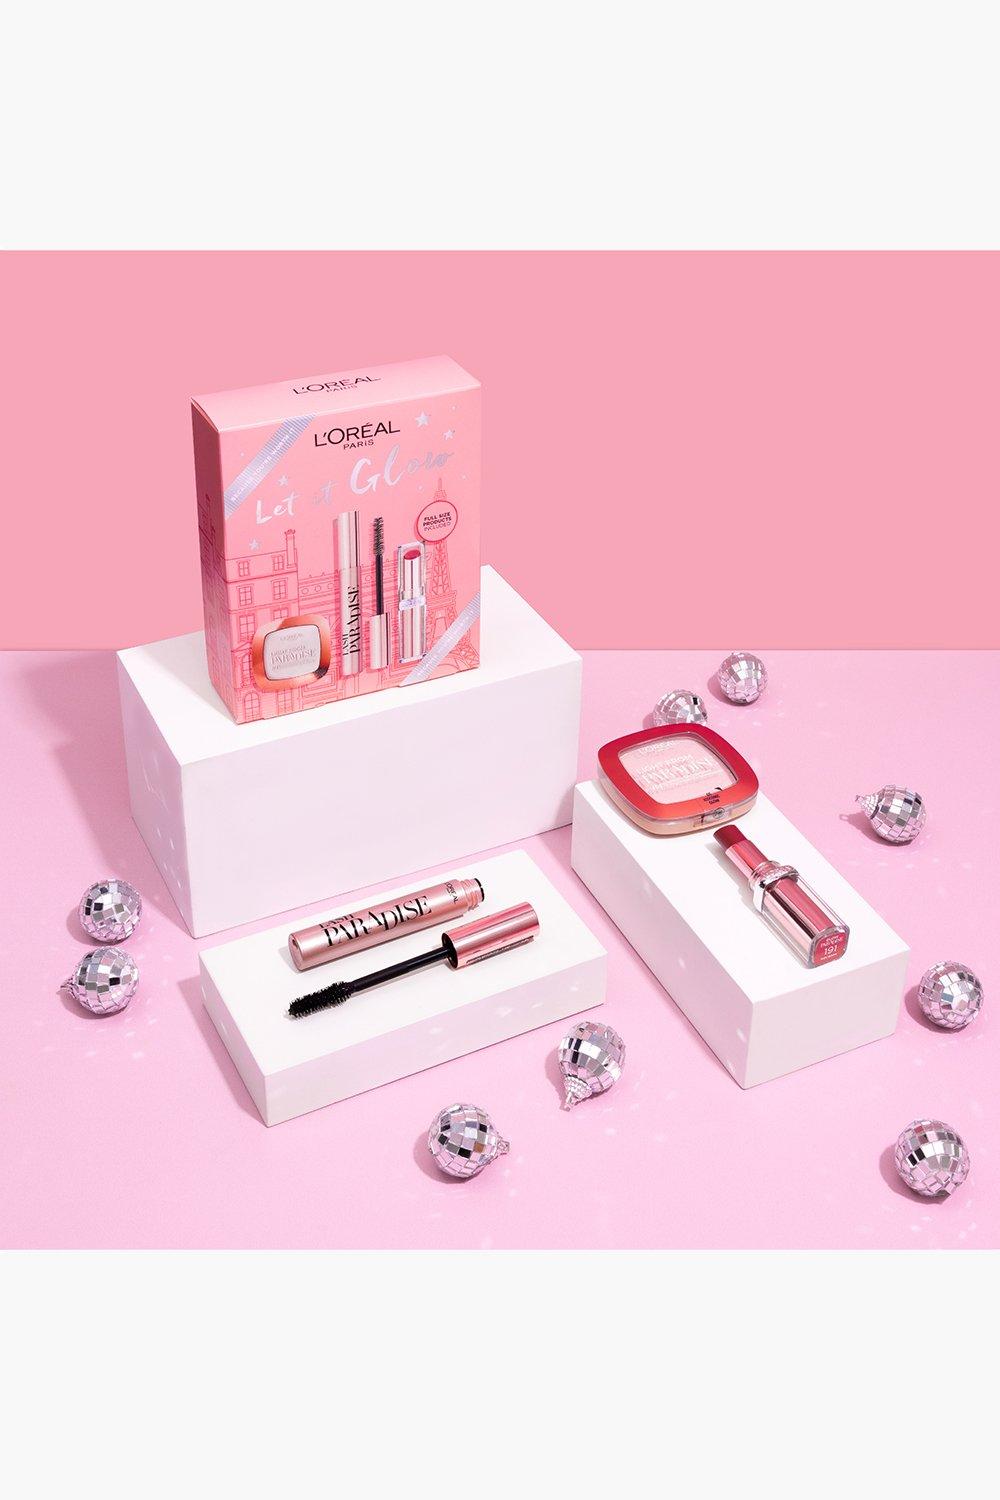 L'Oreal Paris Let It Glow Lipstick, Mascara & Highlighting Powder Trio Geschenkset, Pink